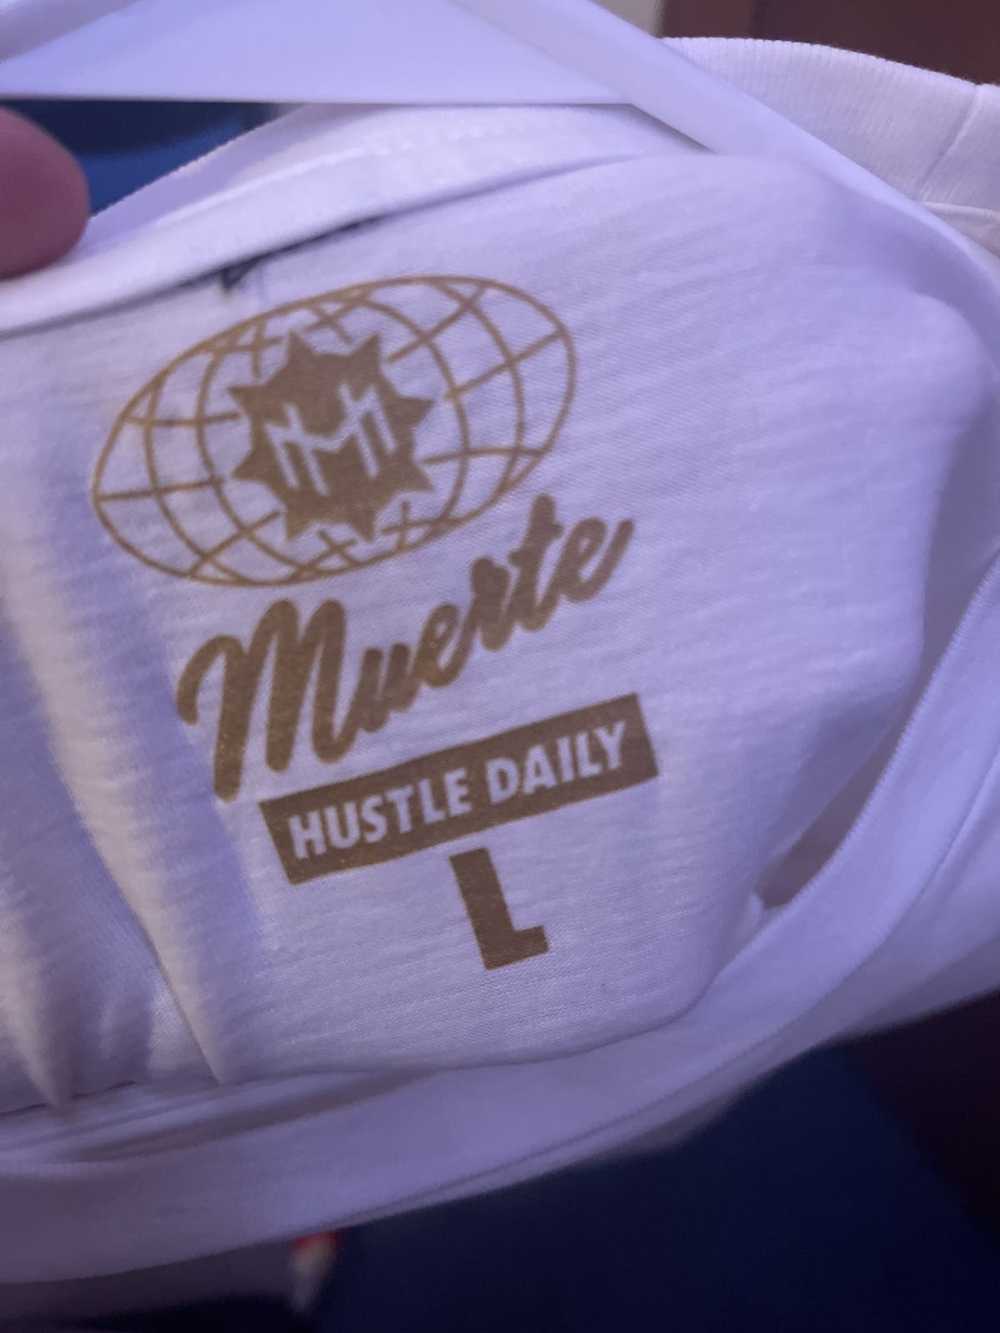 Designer Hustle daily t-shirt - image 5